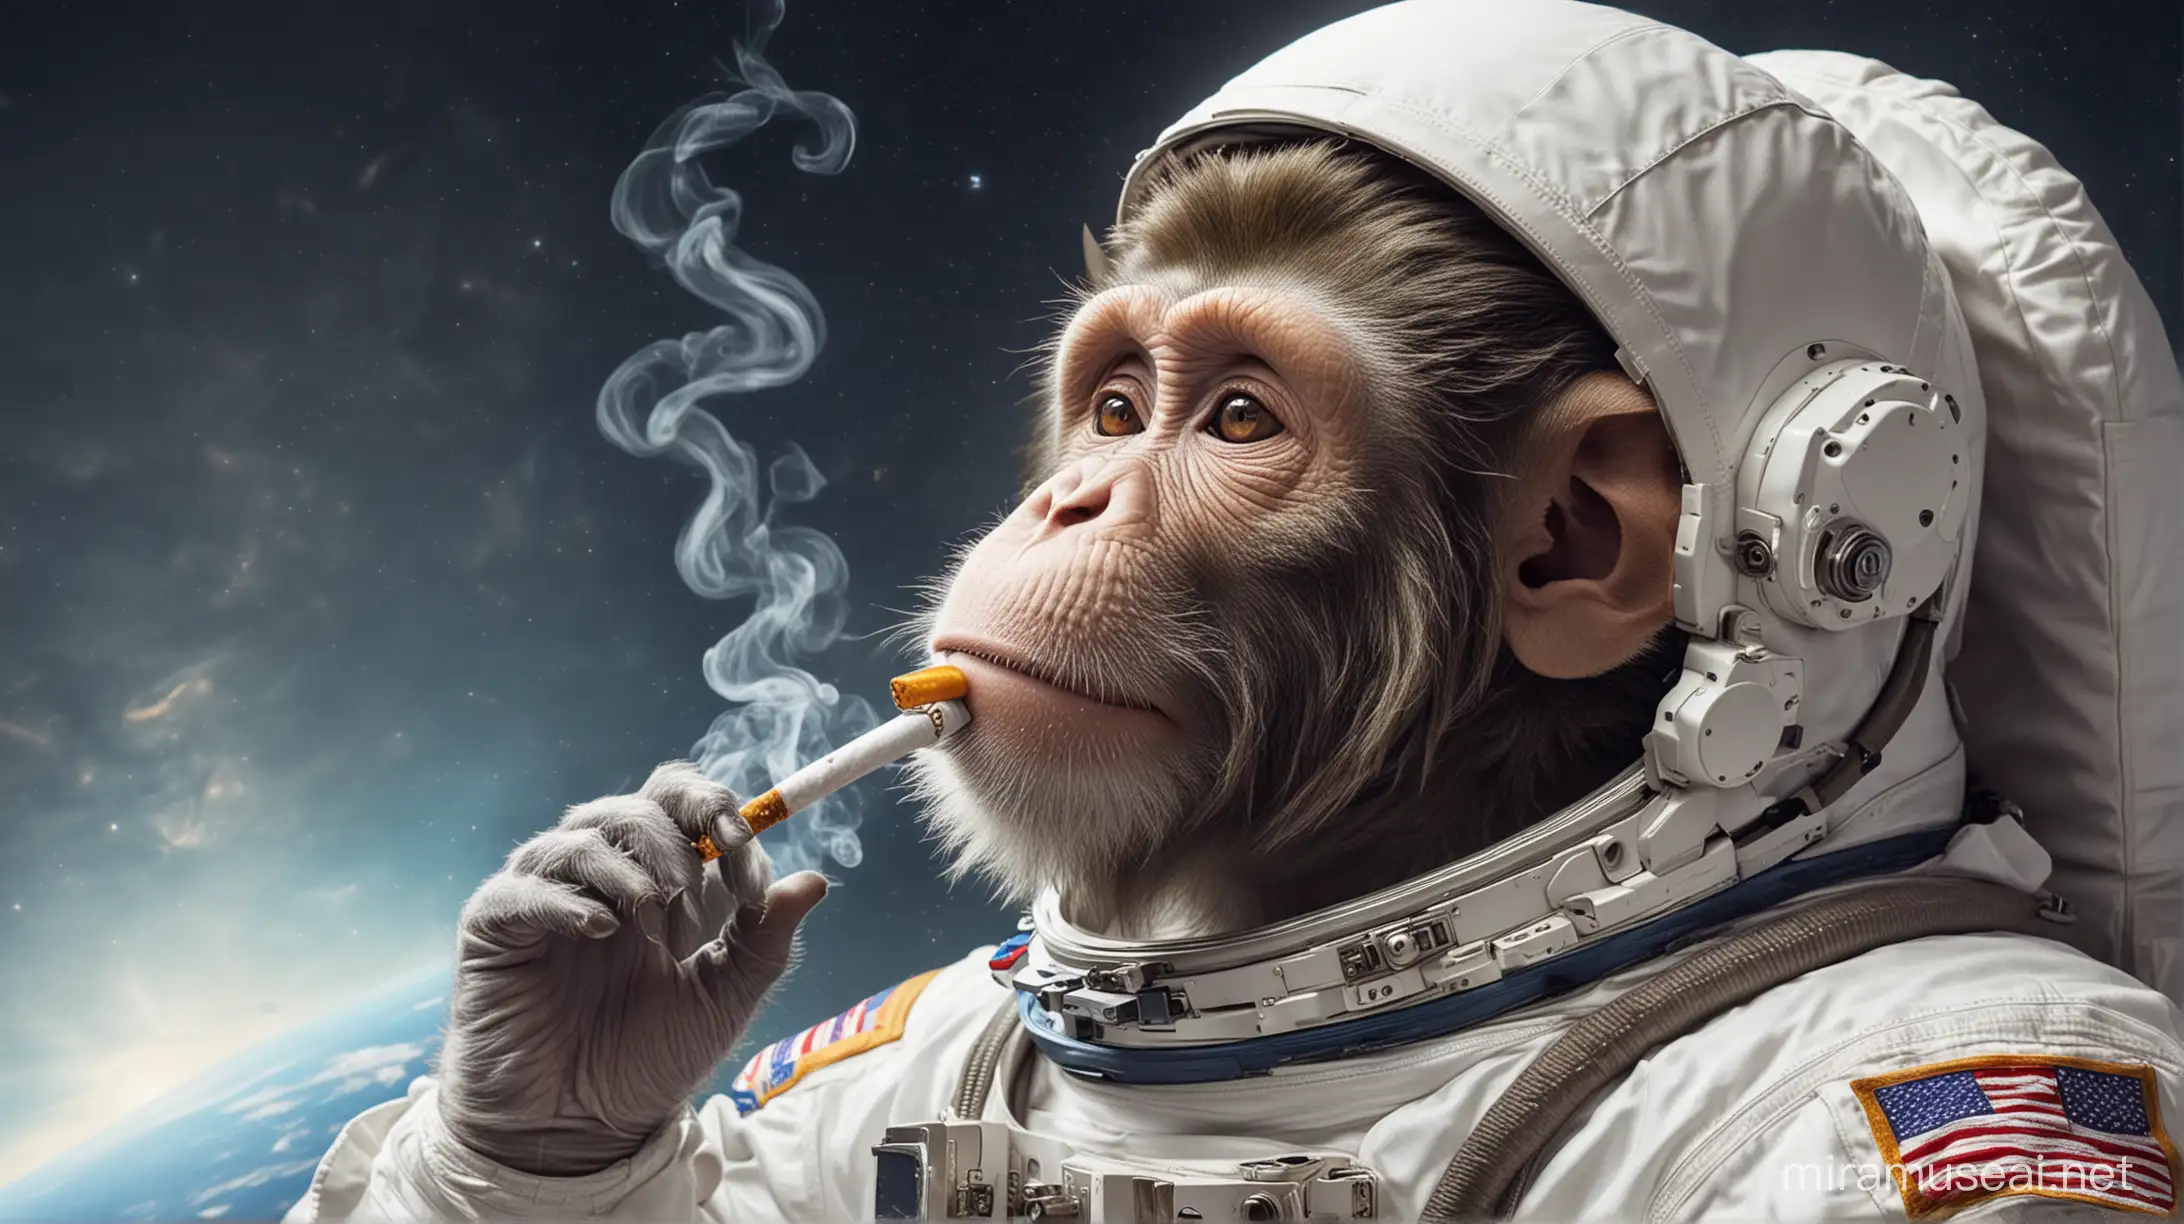 An astronaut monkey wearing a dumb astronaut suit, smoking marijuana, and looking funny.